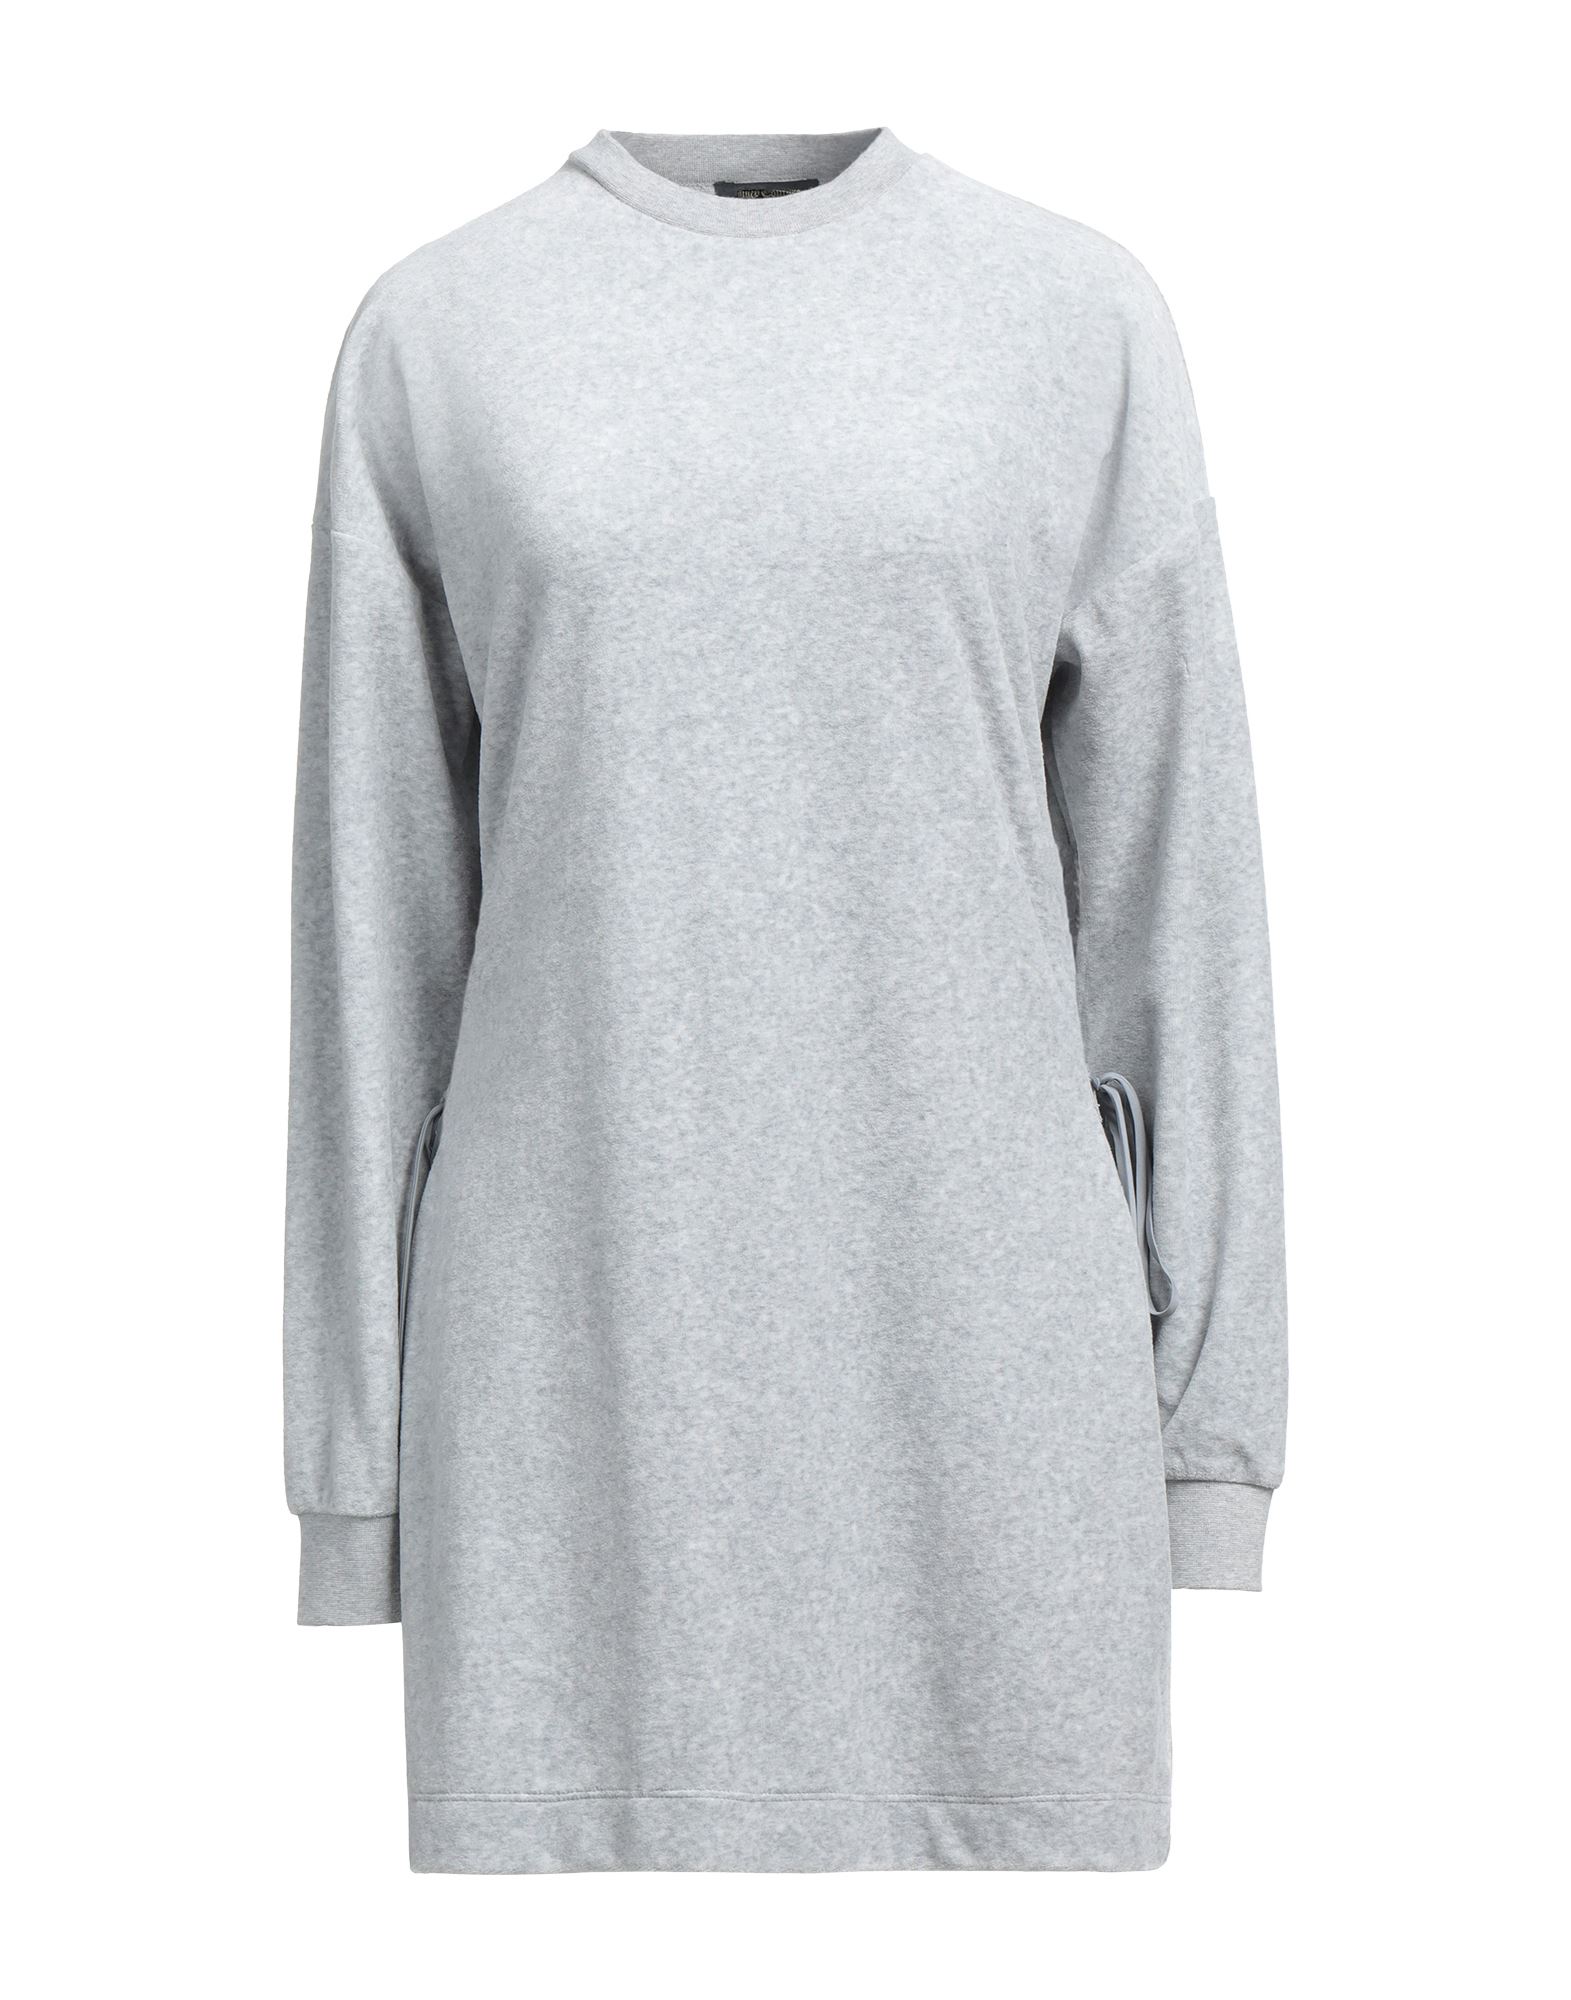 Juicy Couture Sweatshirts In Grey